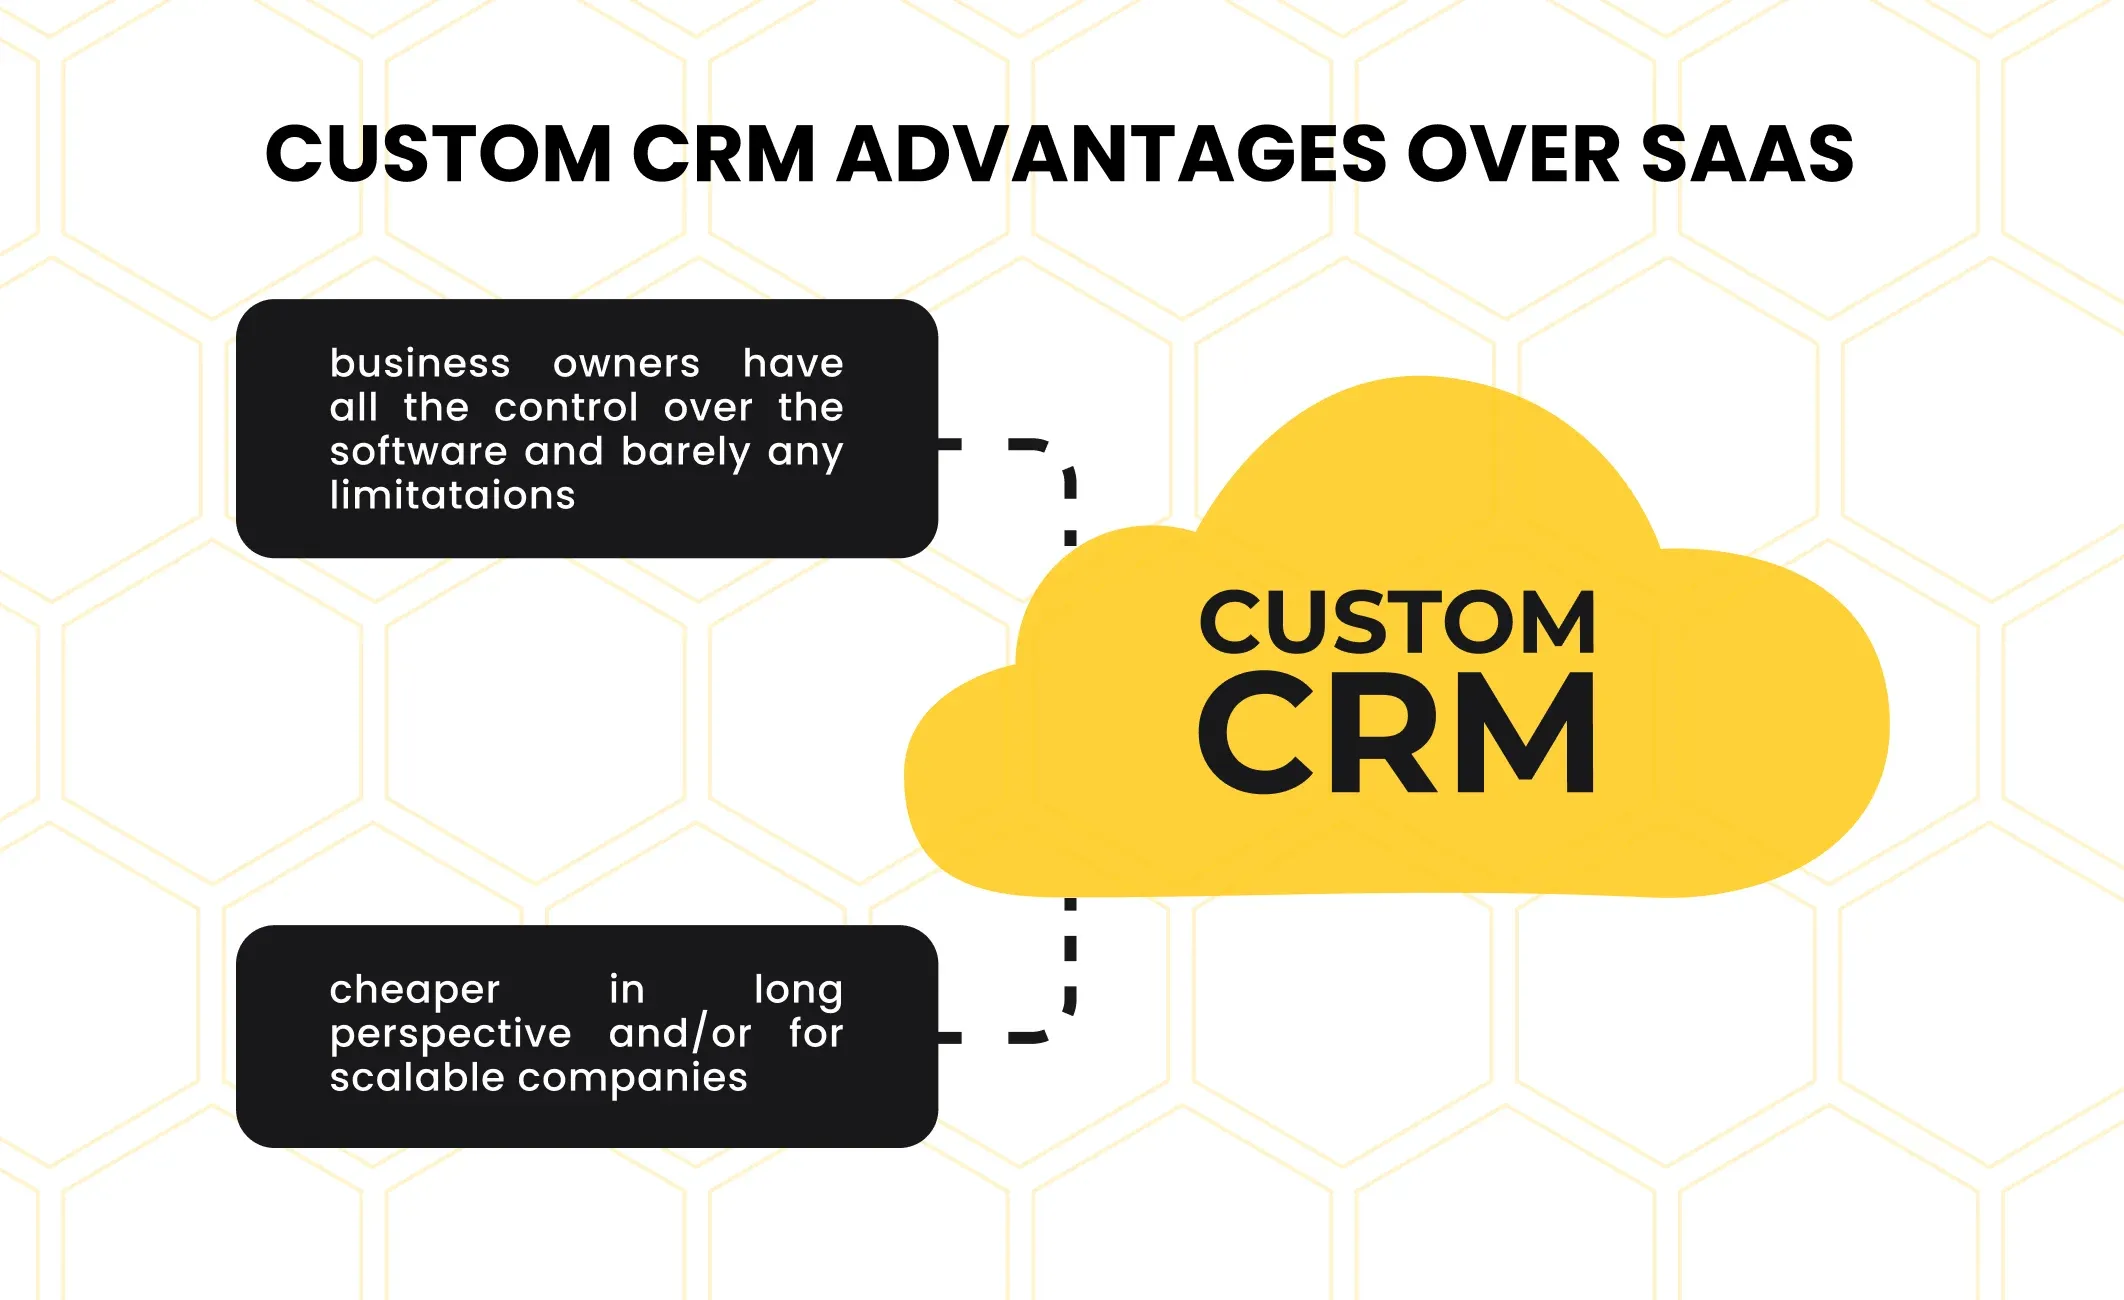 Custom CRM vs SaaS advantages